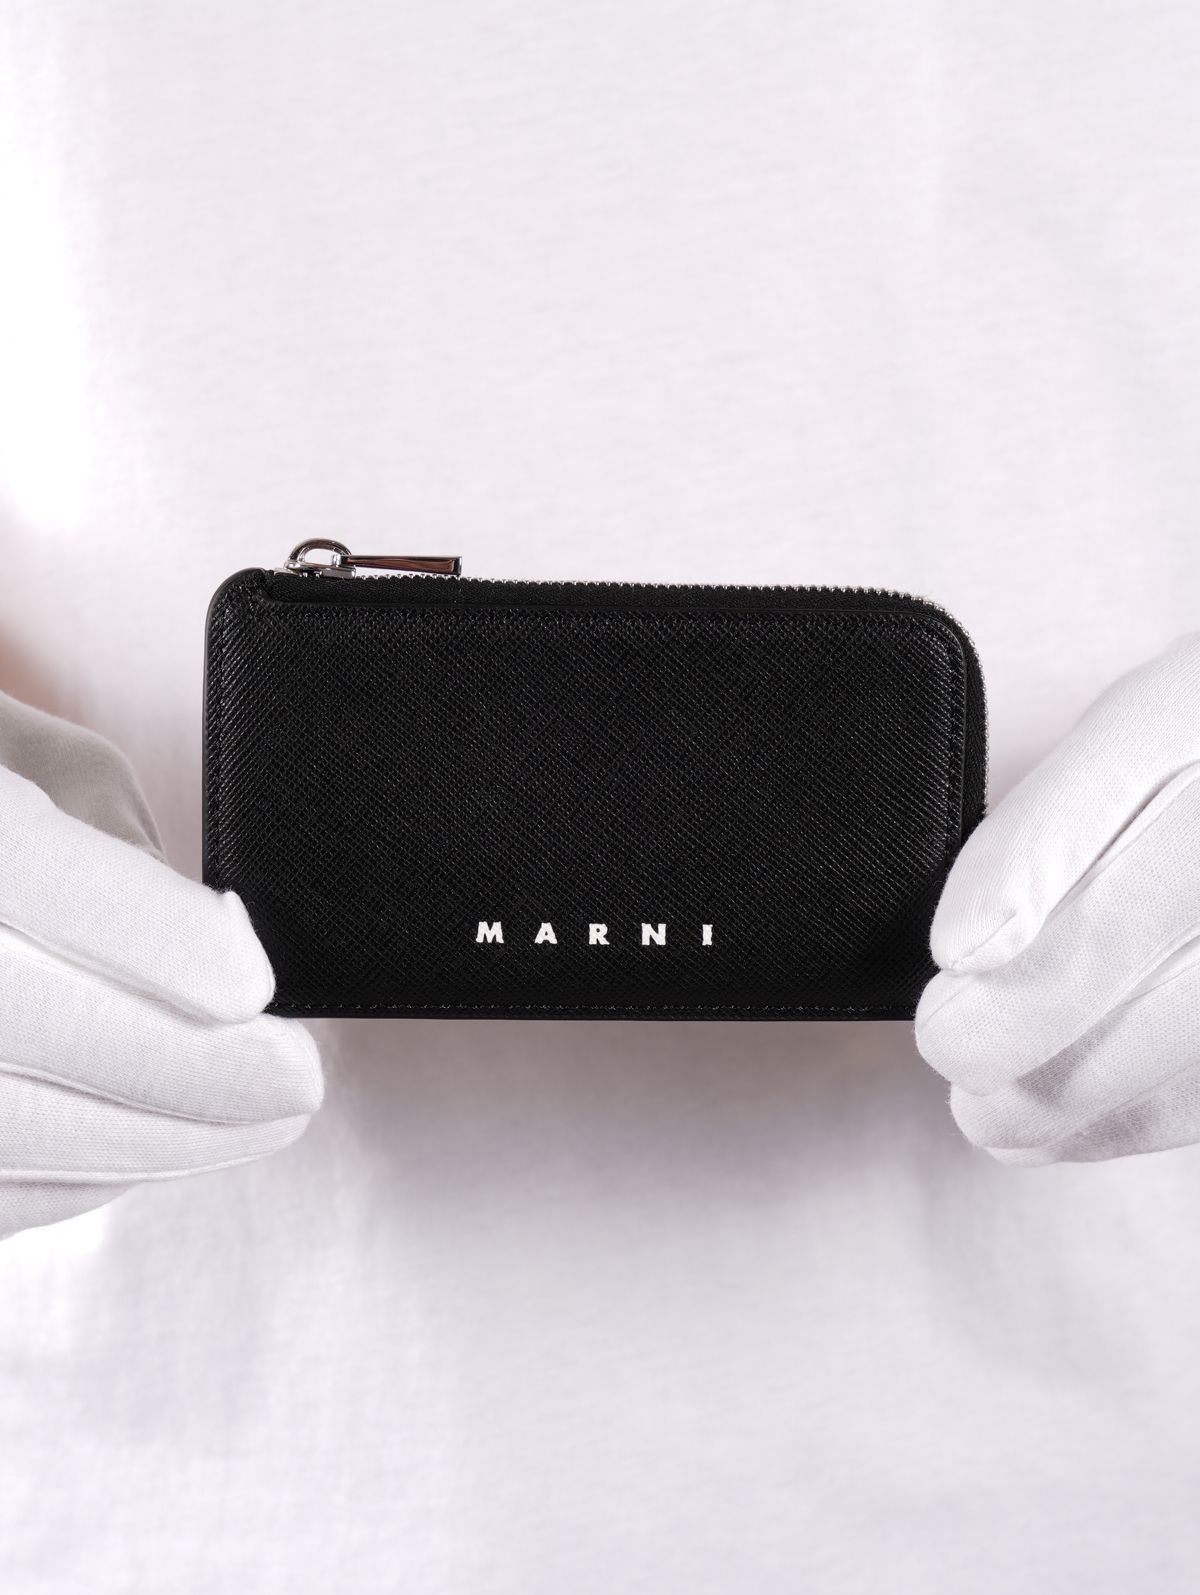 MARNI - 【ラスト1点】COIN CARD CASE / コインケース / カードケース